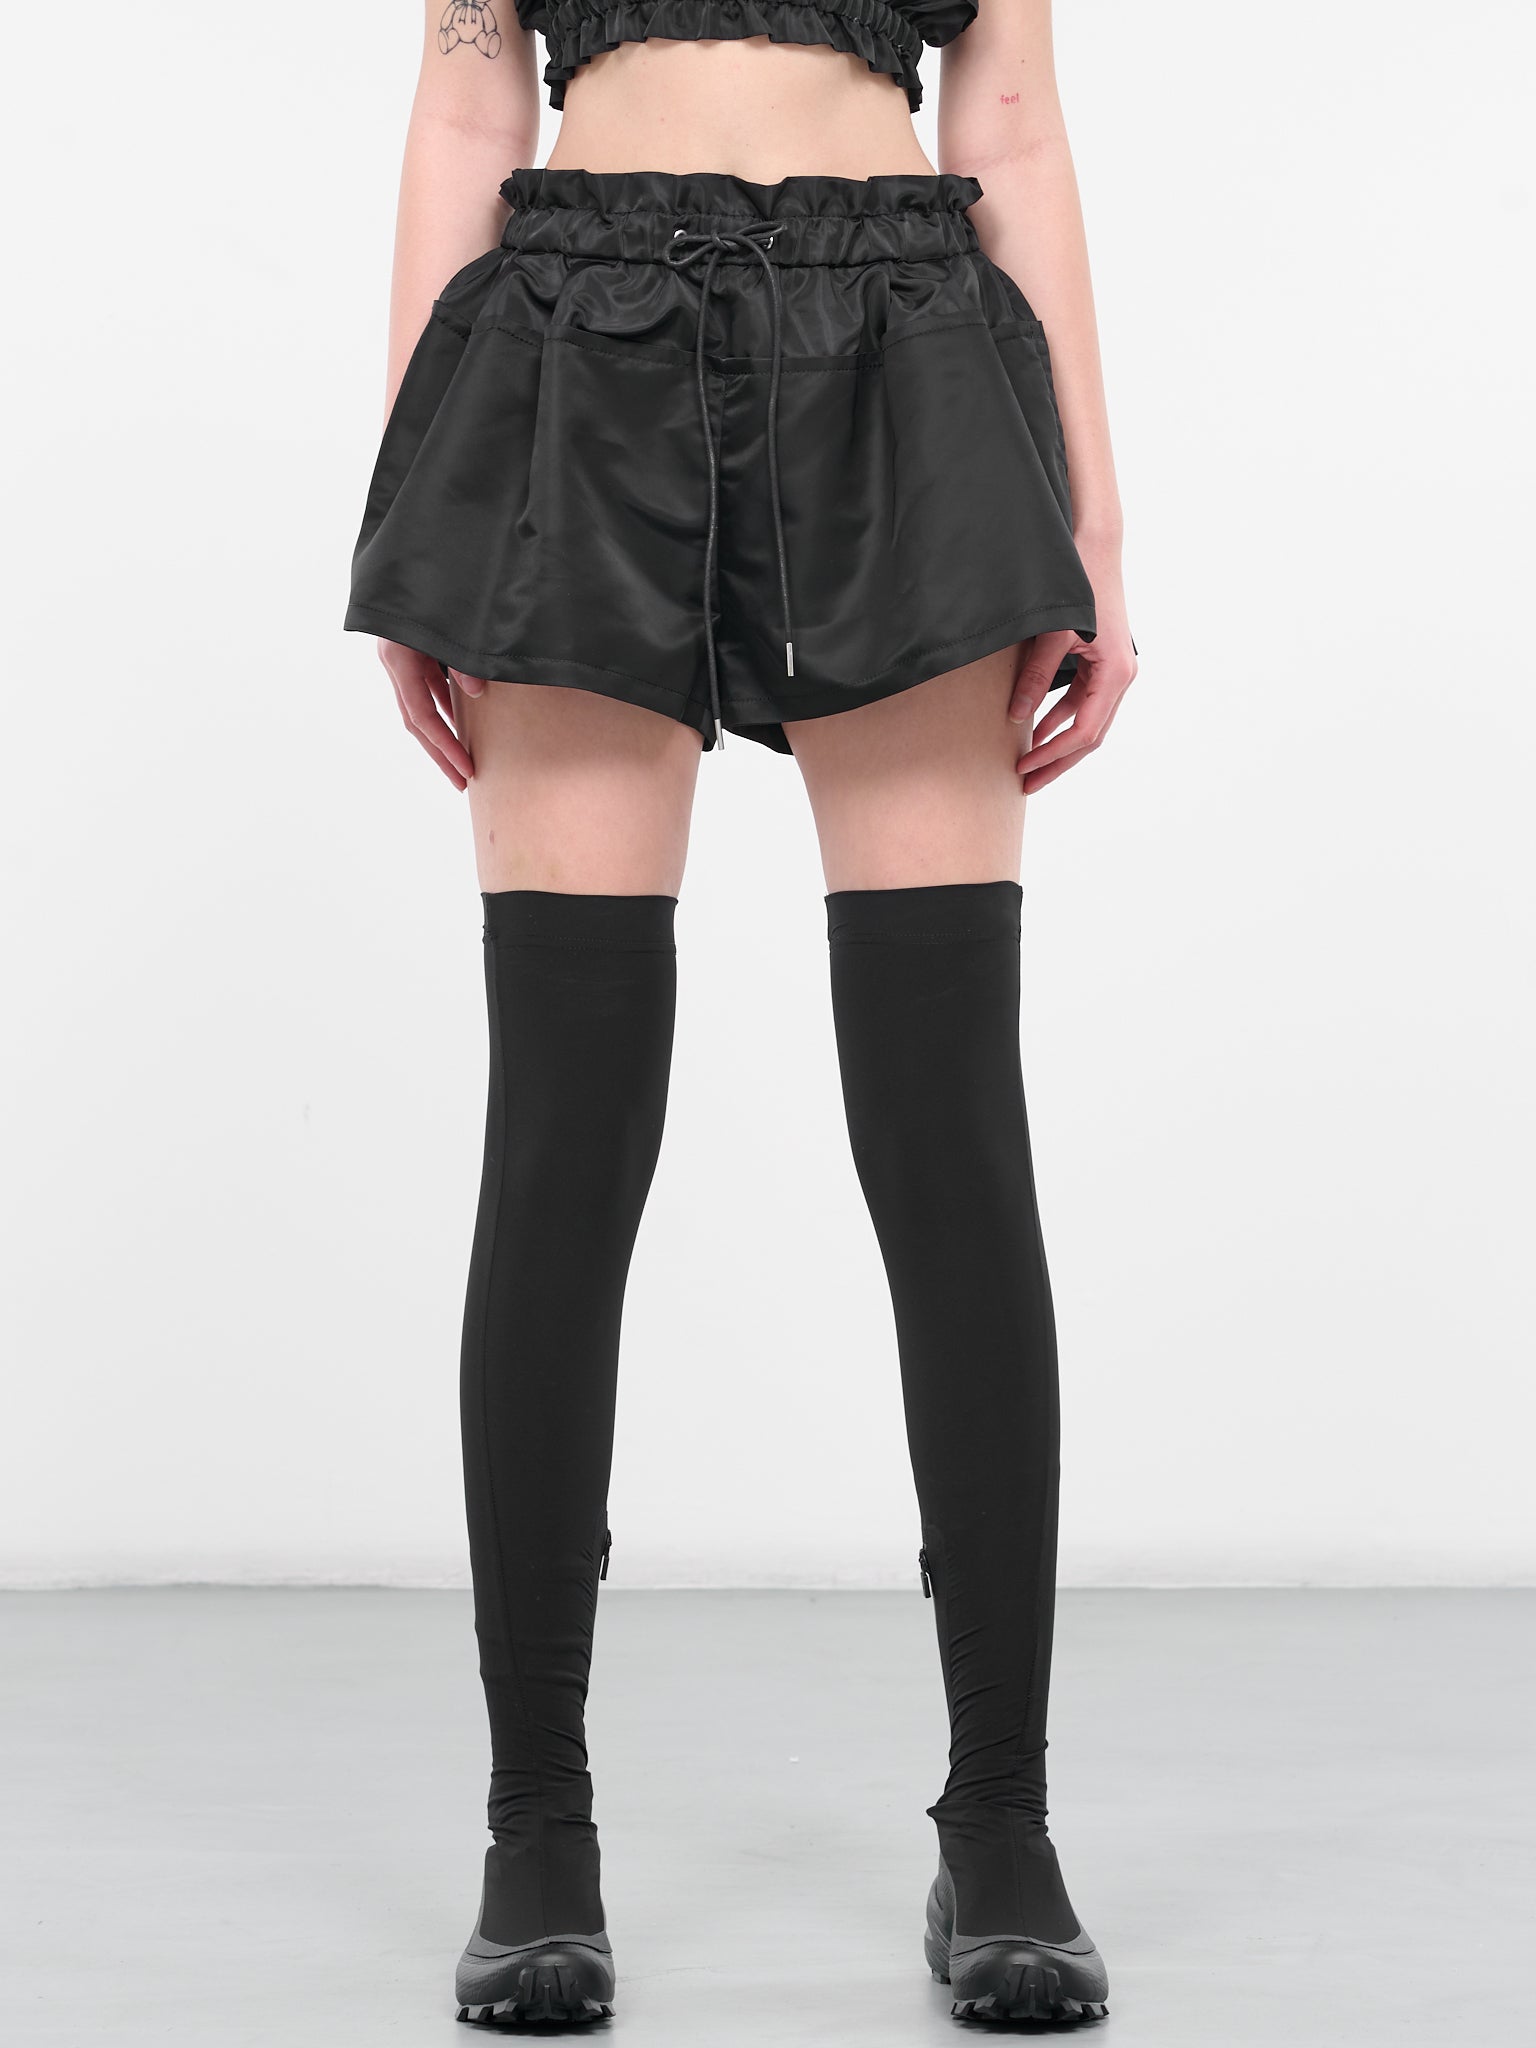 Nylon Twill Shorts (24-07092-001-BLACK)